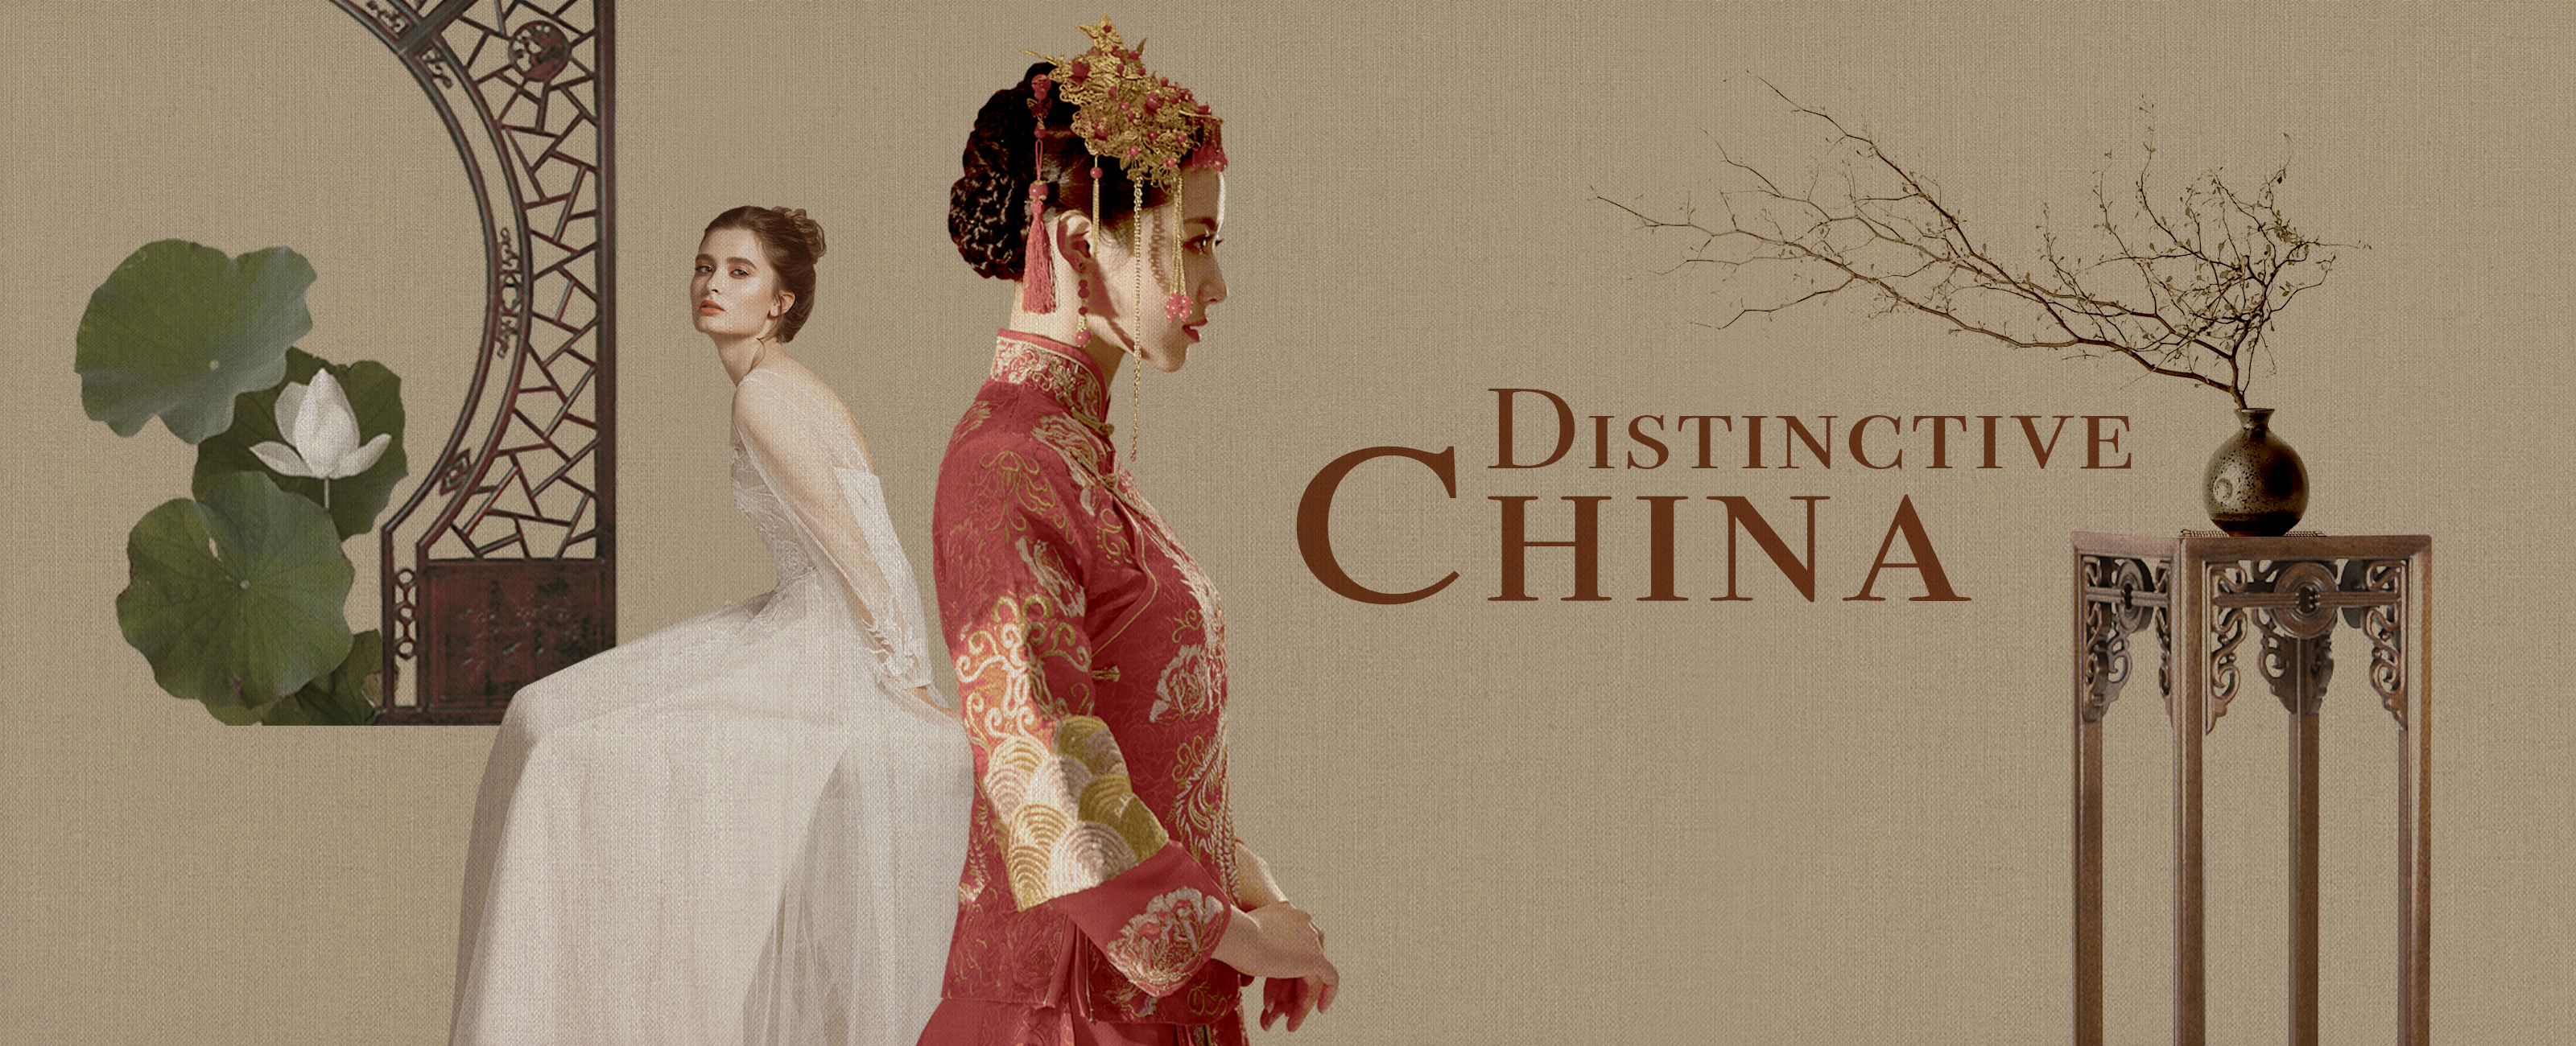 Distinctive China